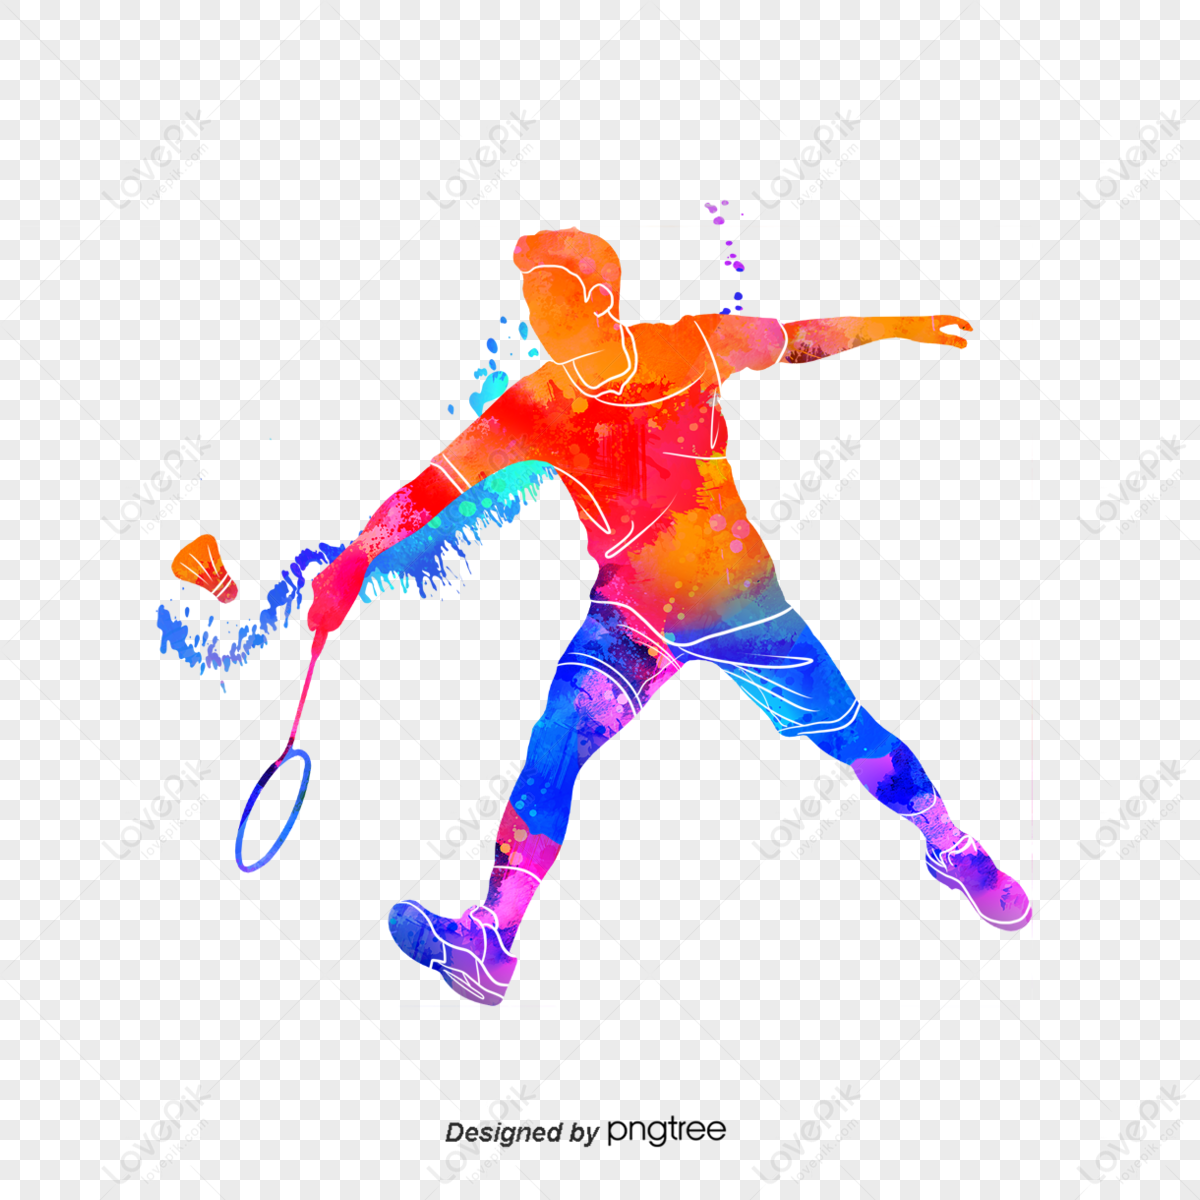 Cartoon Badminton PNG Images, Play A Ball, Badminton PNG Transparent  Background - Pngtree | Badminton, Badminton logo, Badminton pictures